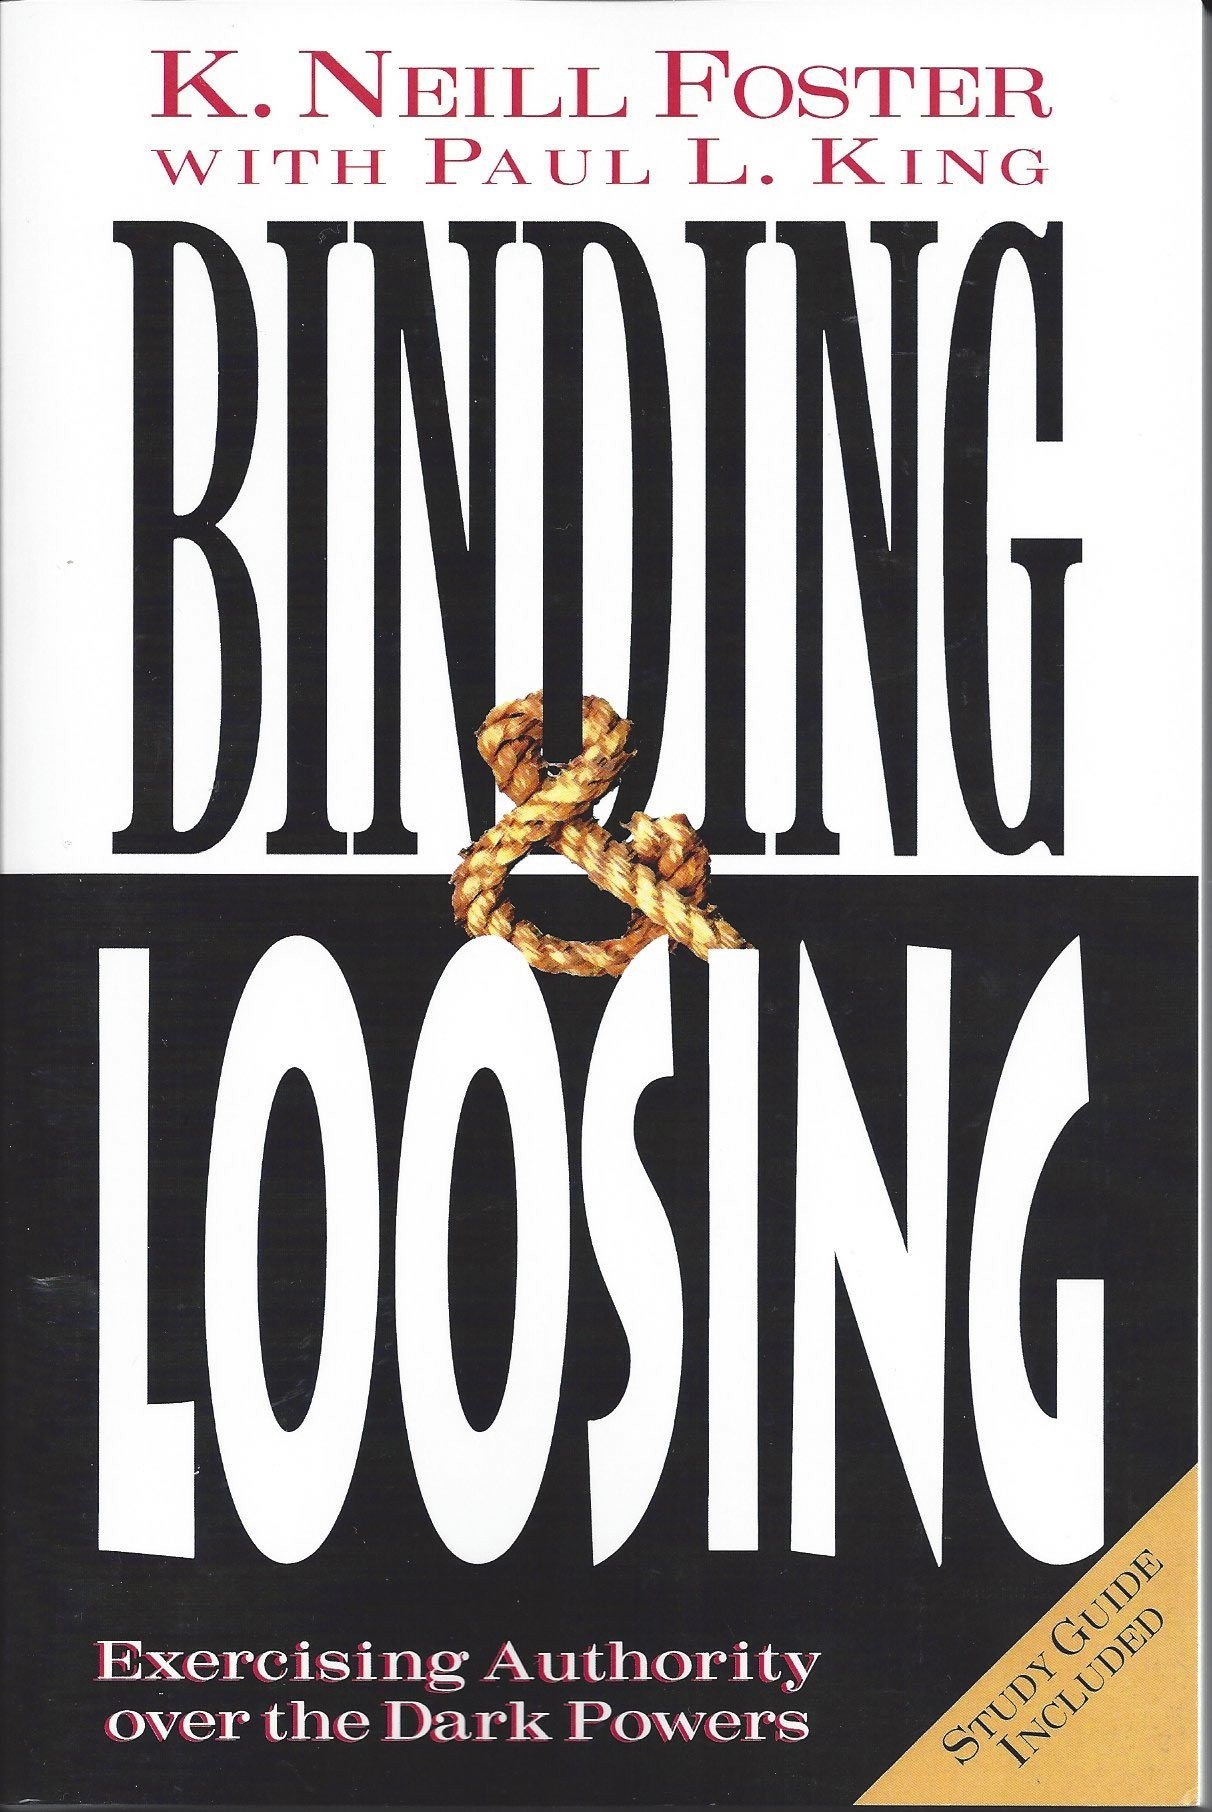 Binding & Loosing